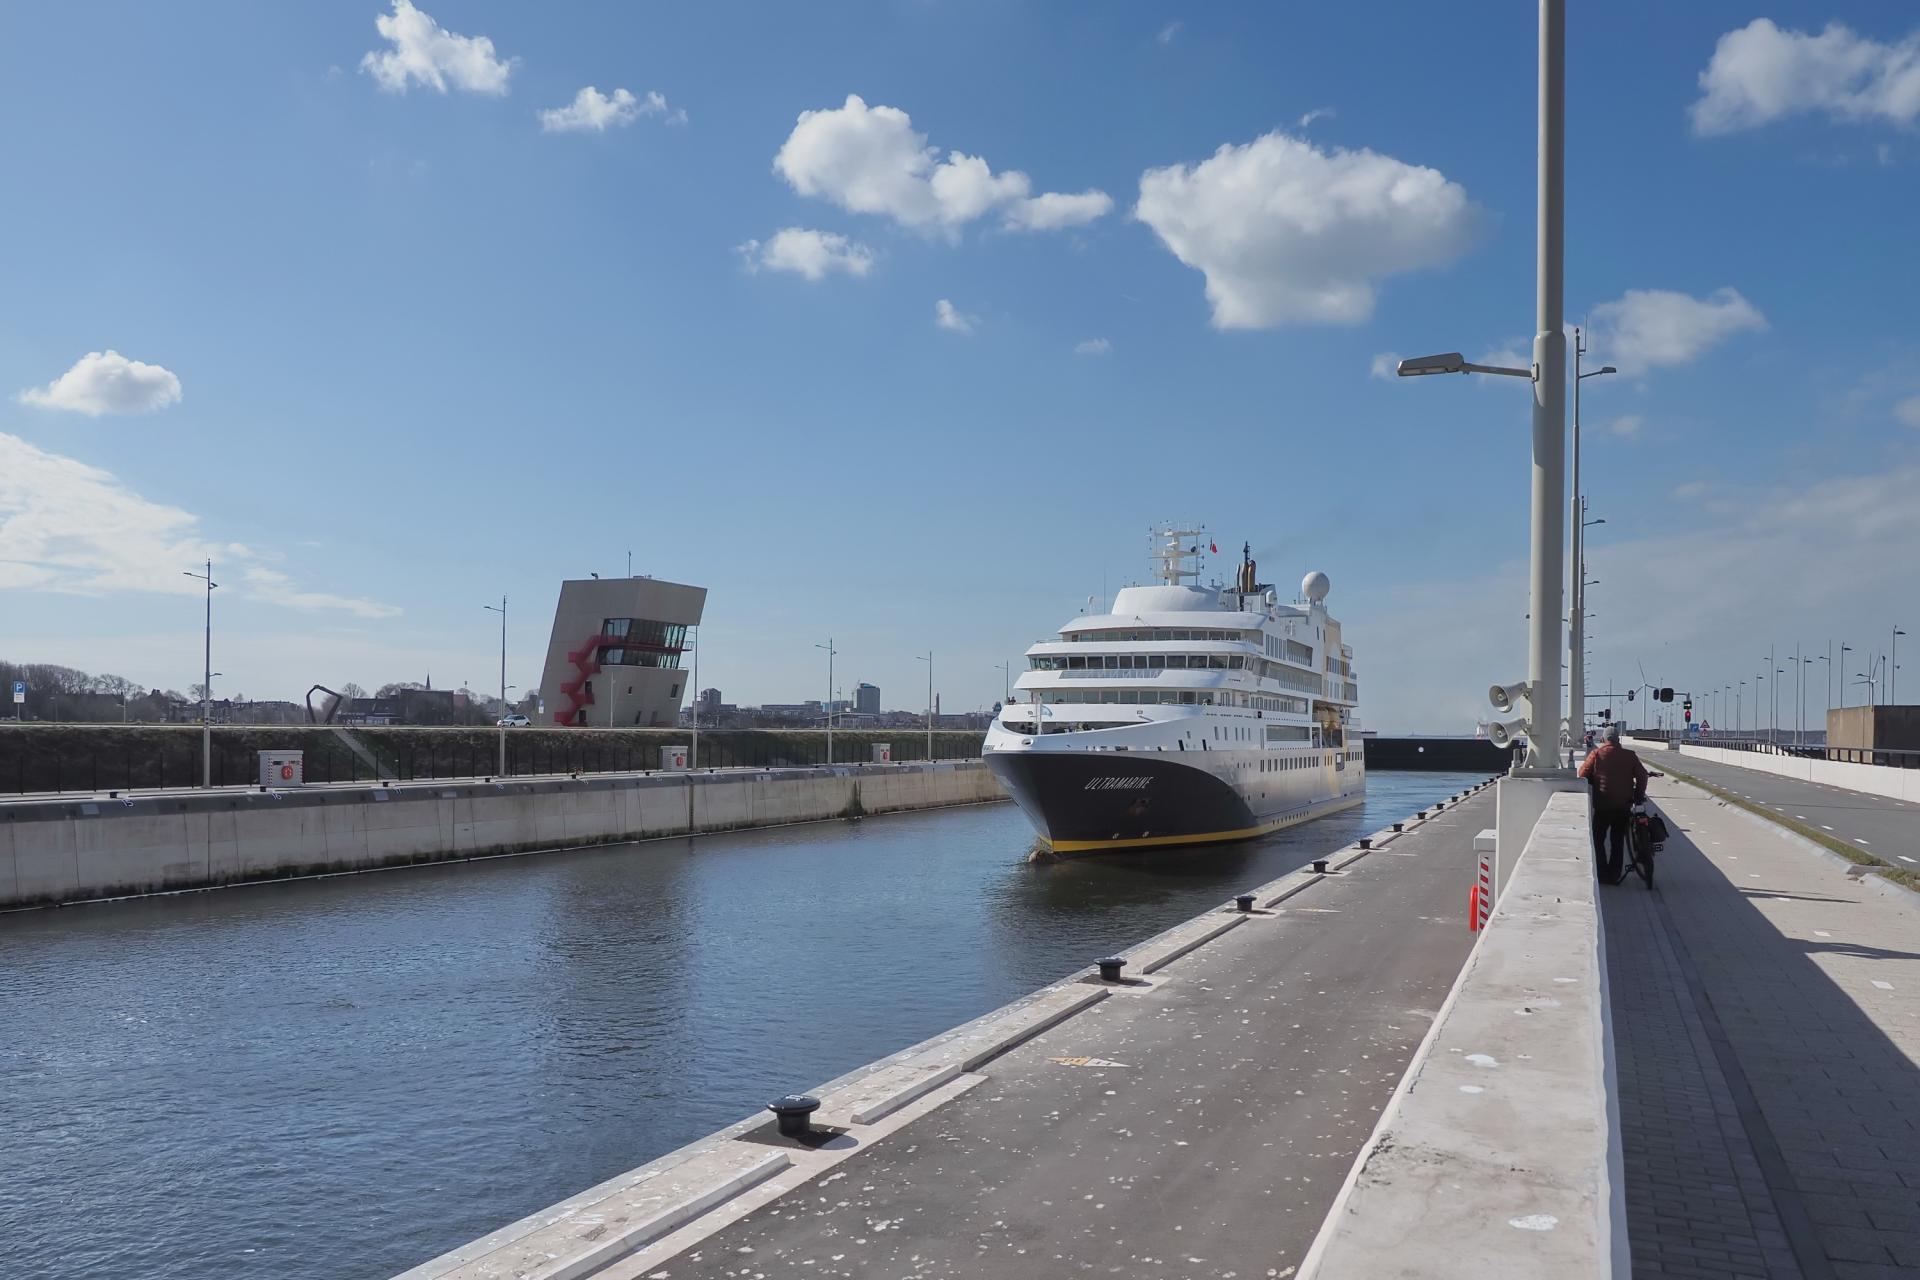 London Photography Awards Winner - New and biggest sea lock Zeesluis IJmuiden in use